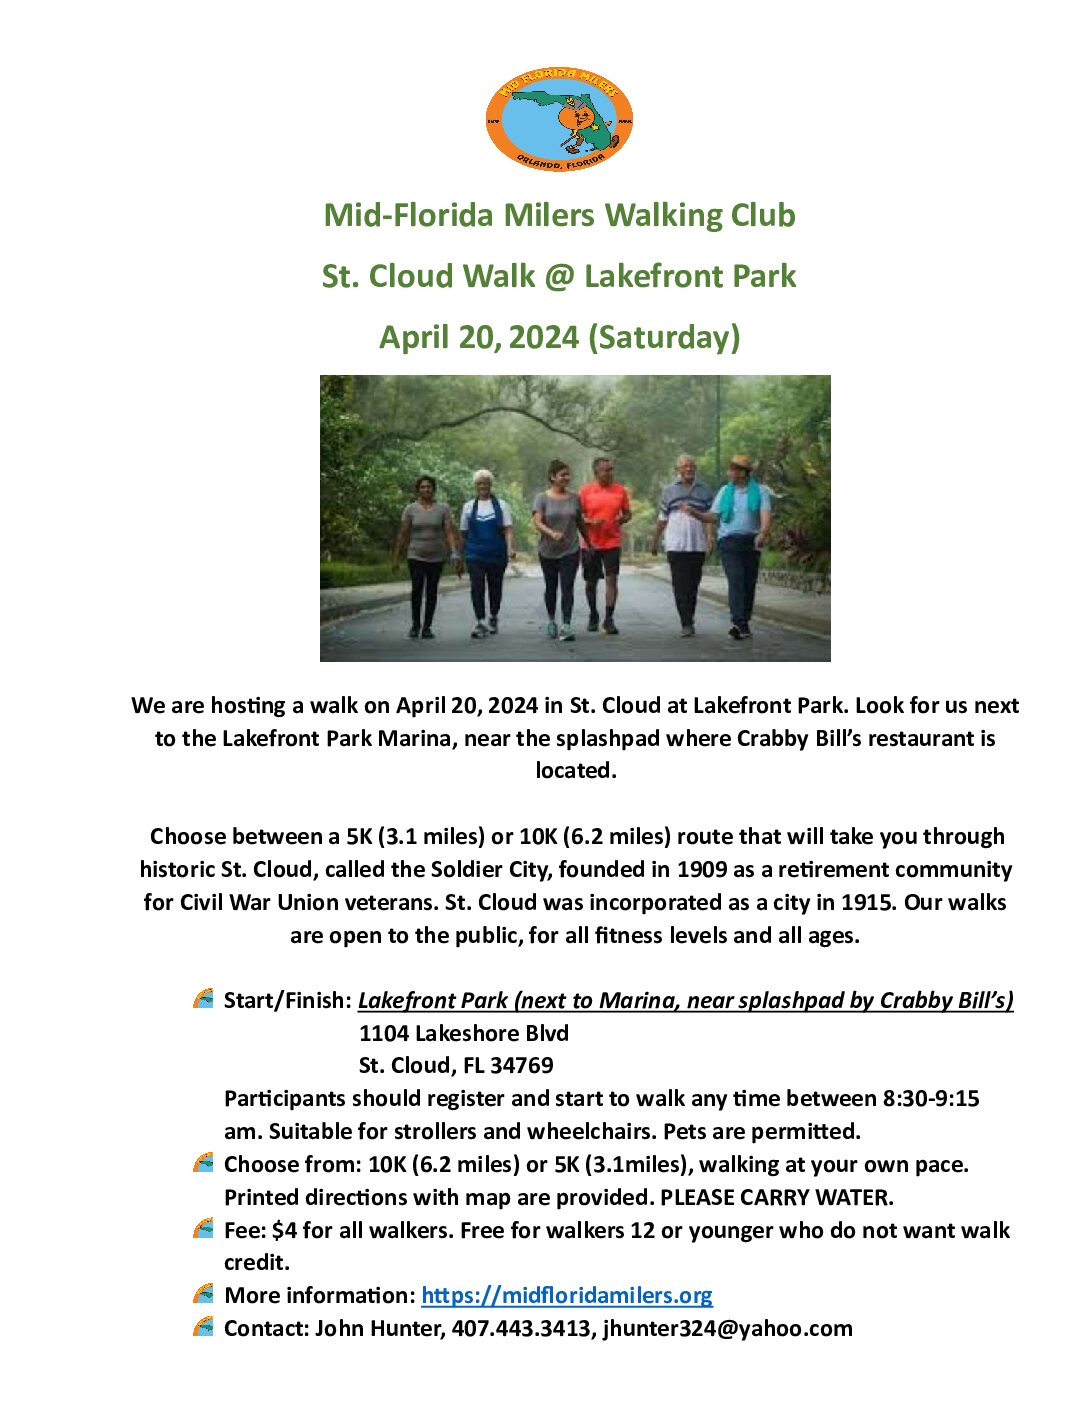 Mid-Florida Milers Club – St. Cloud Walk @ Lakefront Park